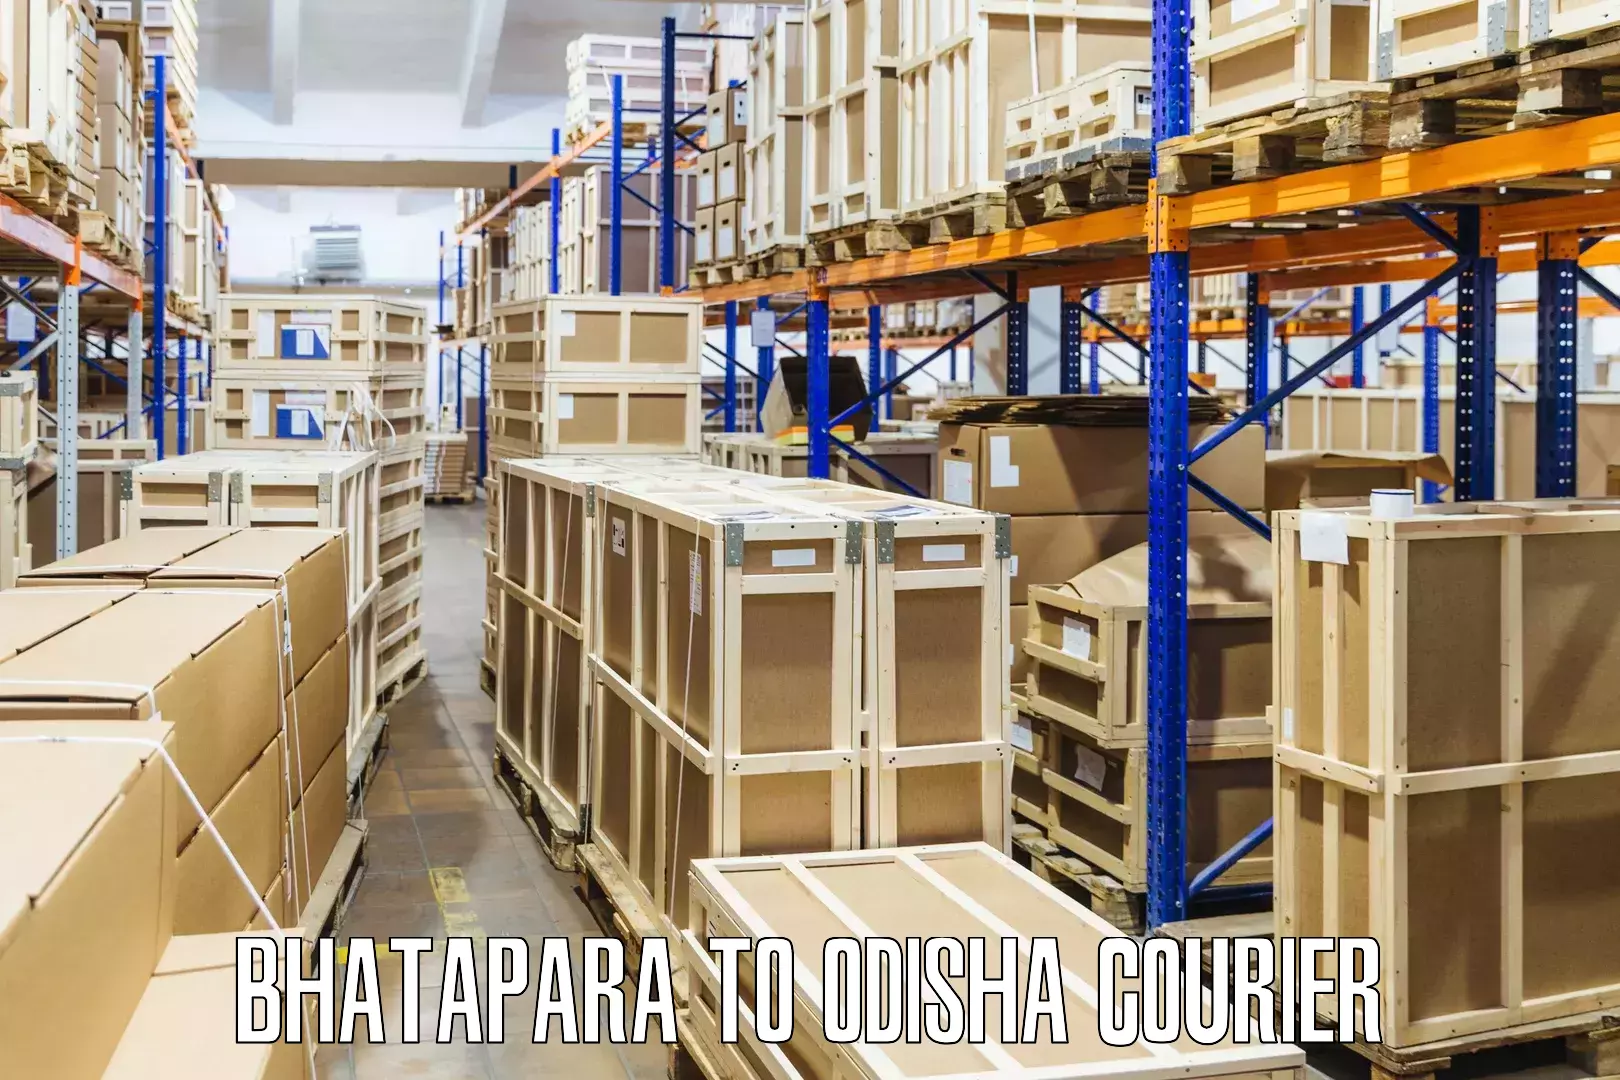 Remote area delivery Bhatapara to Basta